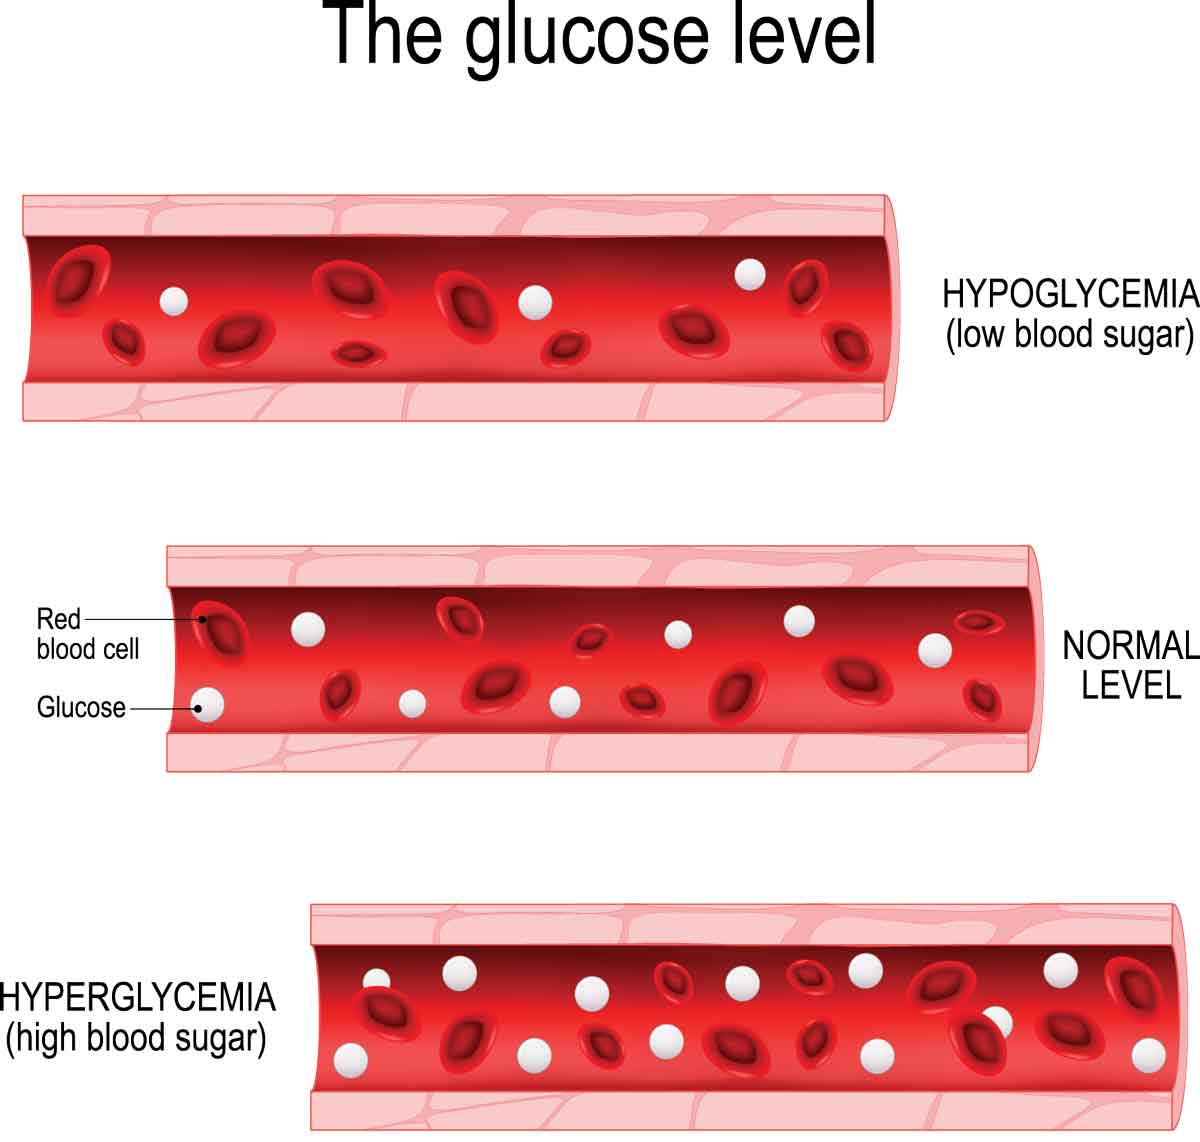 glucose in blood stream - illustration of gluscose levels